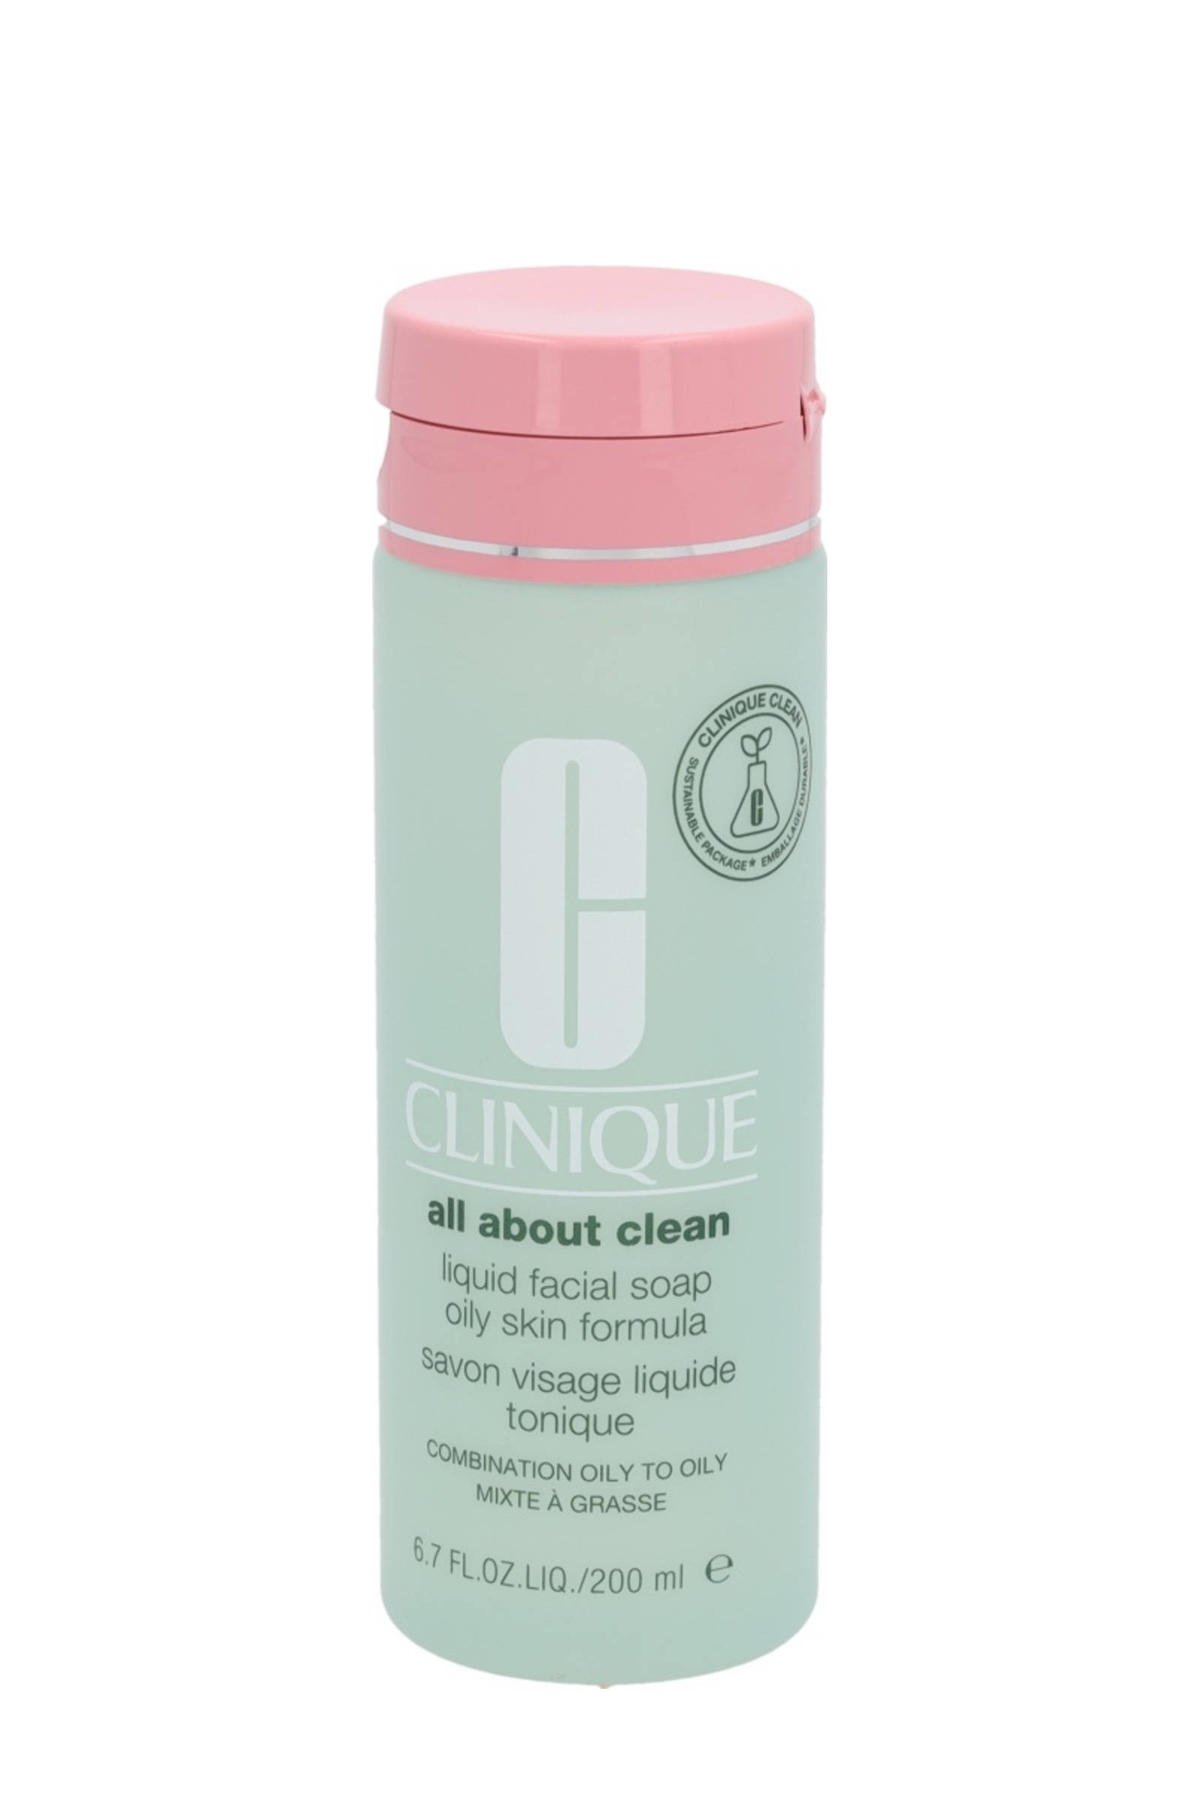 Verstrikking Gelukkig Dag Clinique Liquid Facial Soap Oily skin reinigingszeep stap 1 - 200 ml |  wehkamp